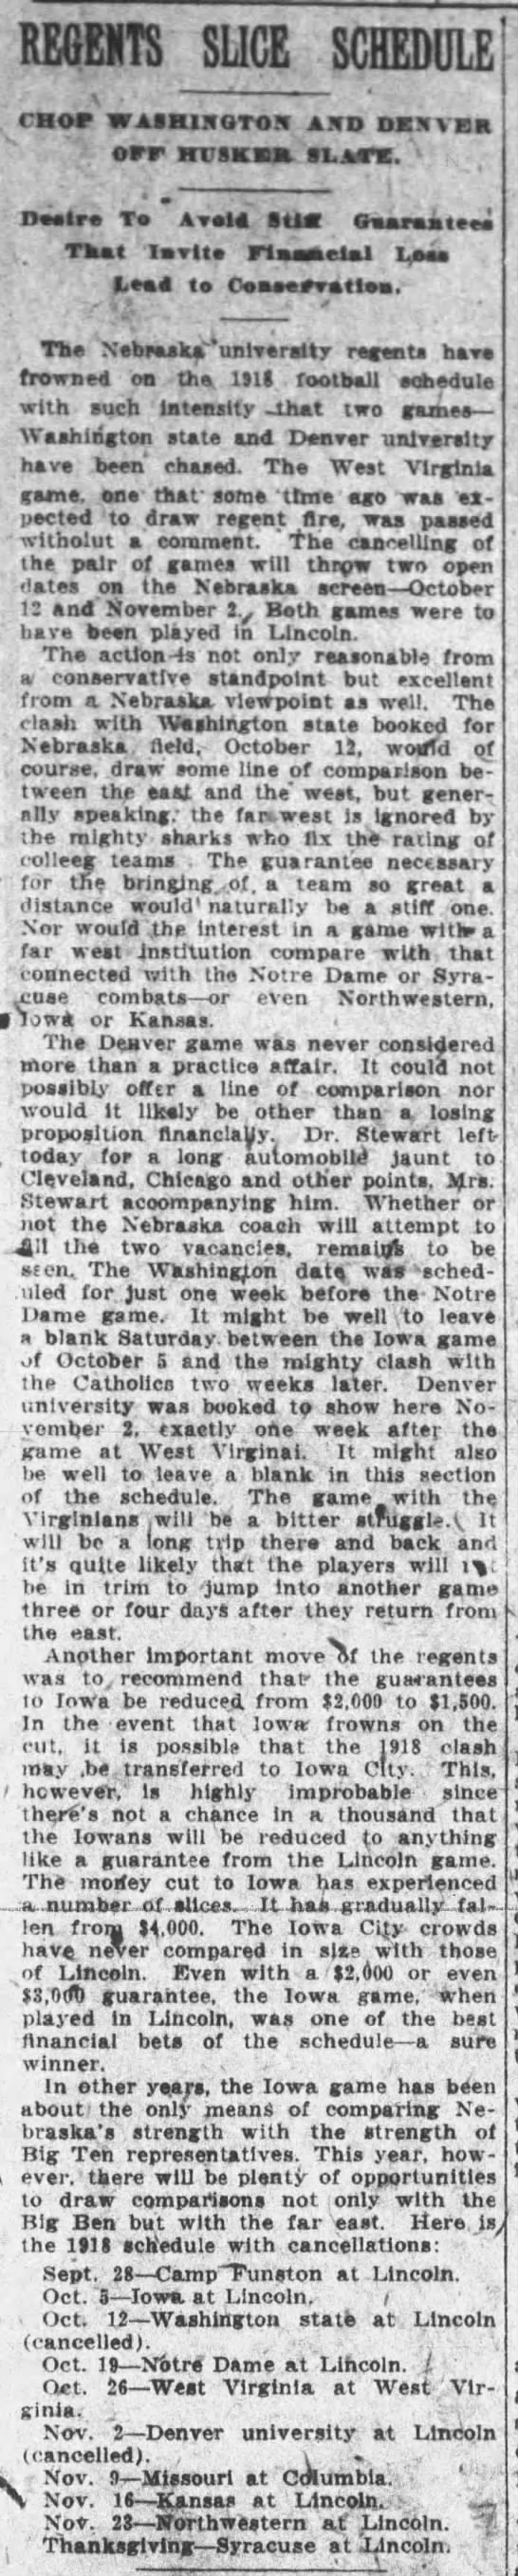 1918 Nebraska cancels home games with Washington State & Denver, financial reasons - 